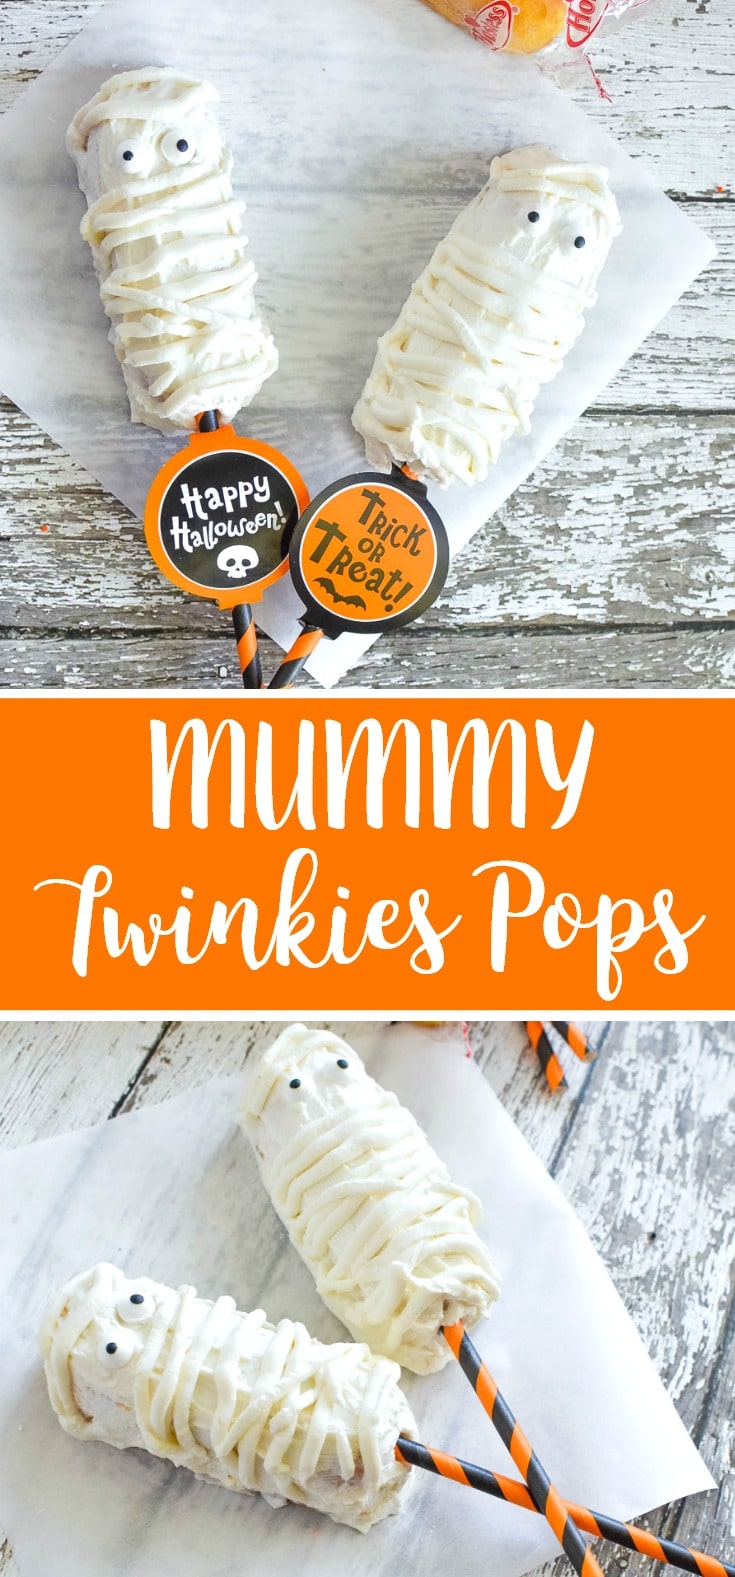 mummy twinkies pops chocolate covered twinkies for halloween